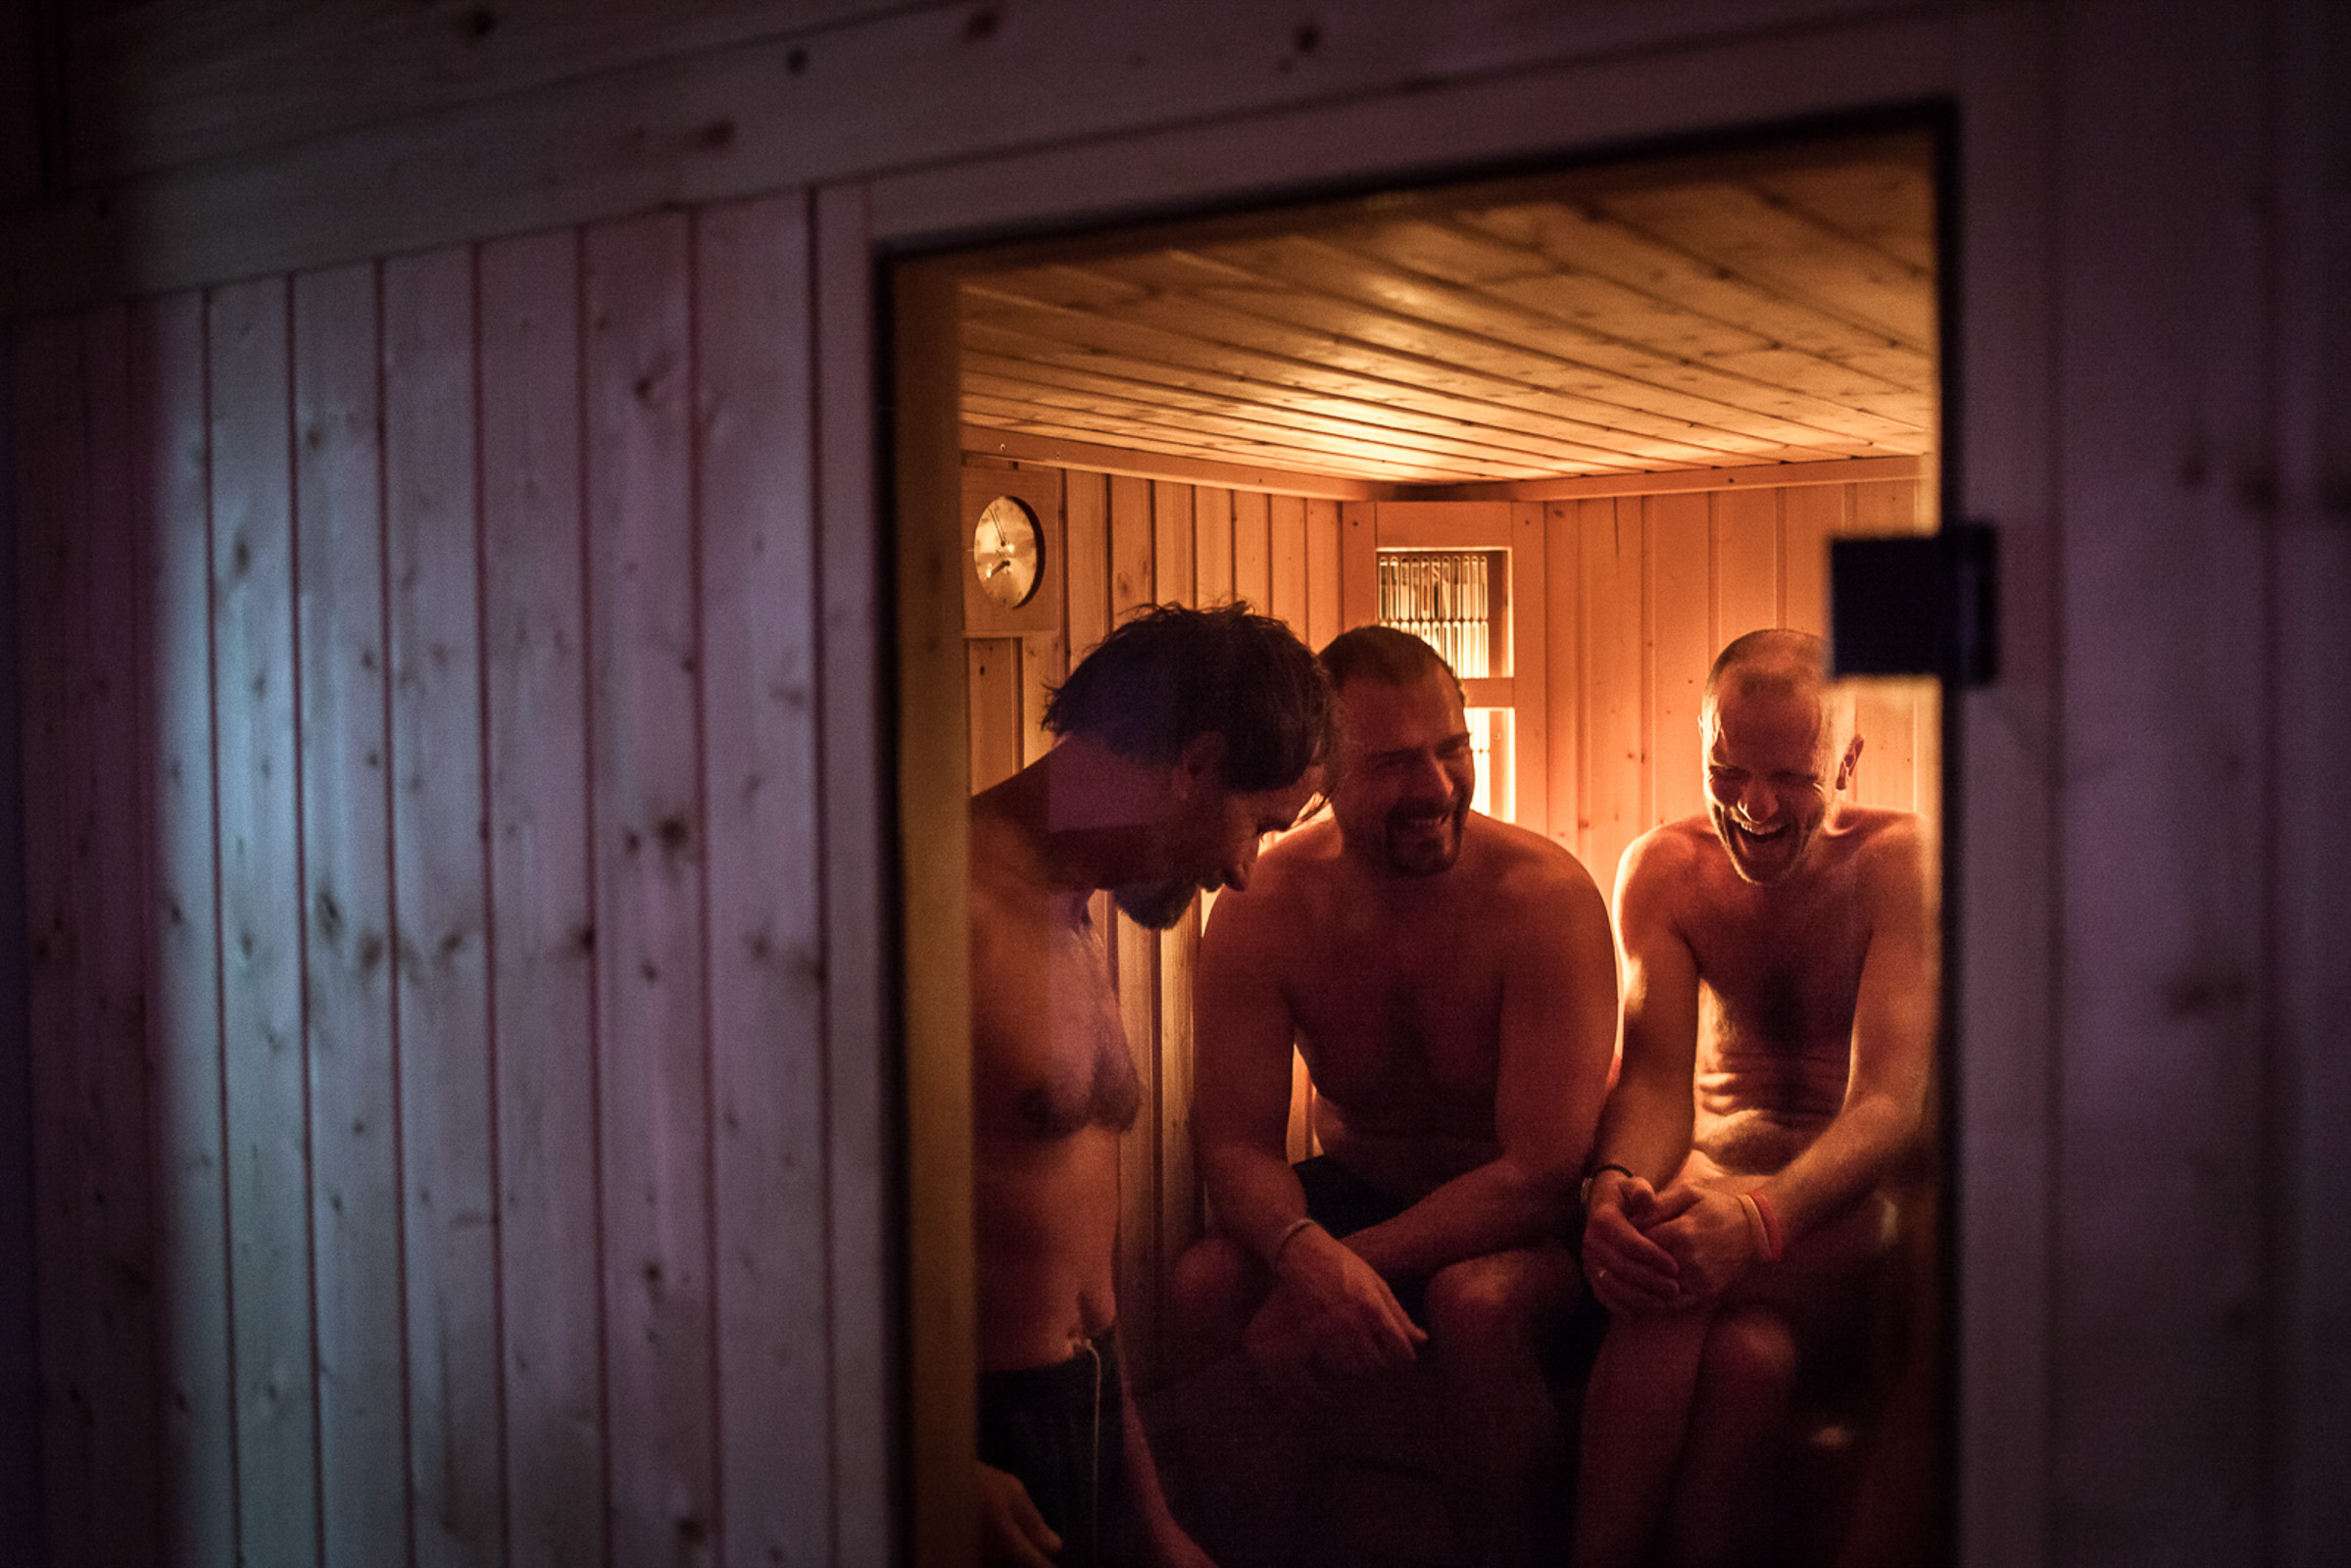 Przesieka, Poland, 11.02.2014. Wim Hof (Iceman) et ses élèves dans le sauna.

Przesieka, Poland, 11.02.2014. Wim Hof (Iceman) and his students in the sauna.